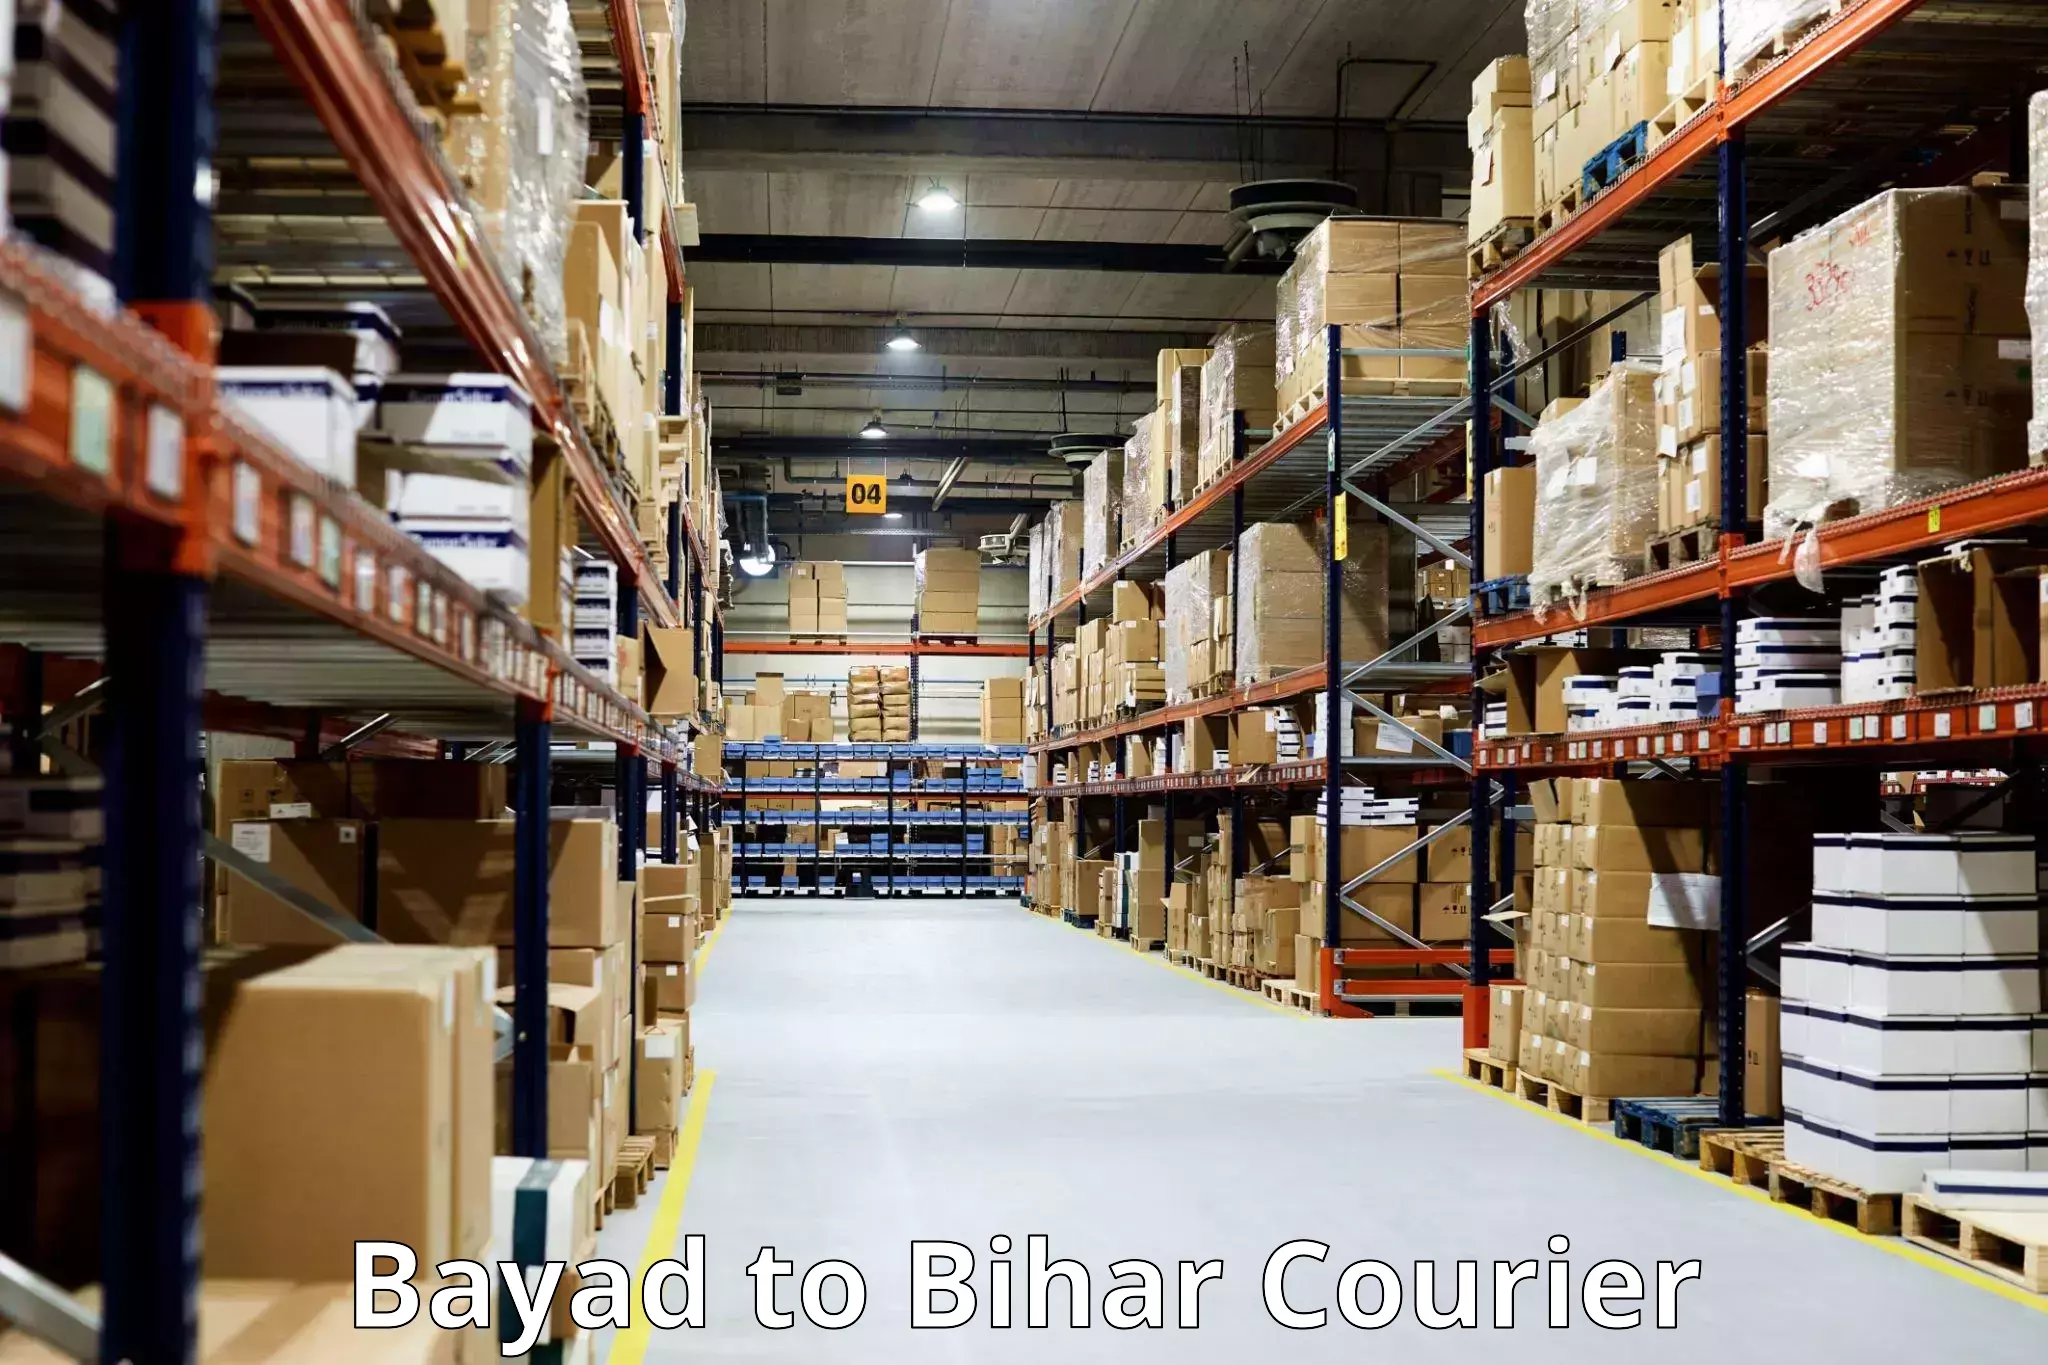 Luggage transport consultancy Bayad to Bihar